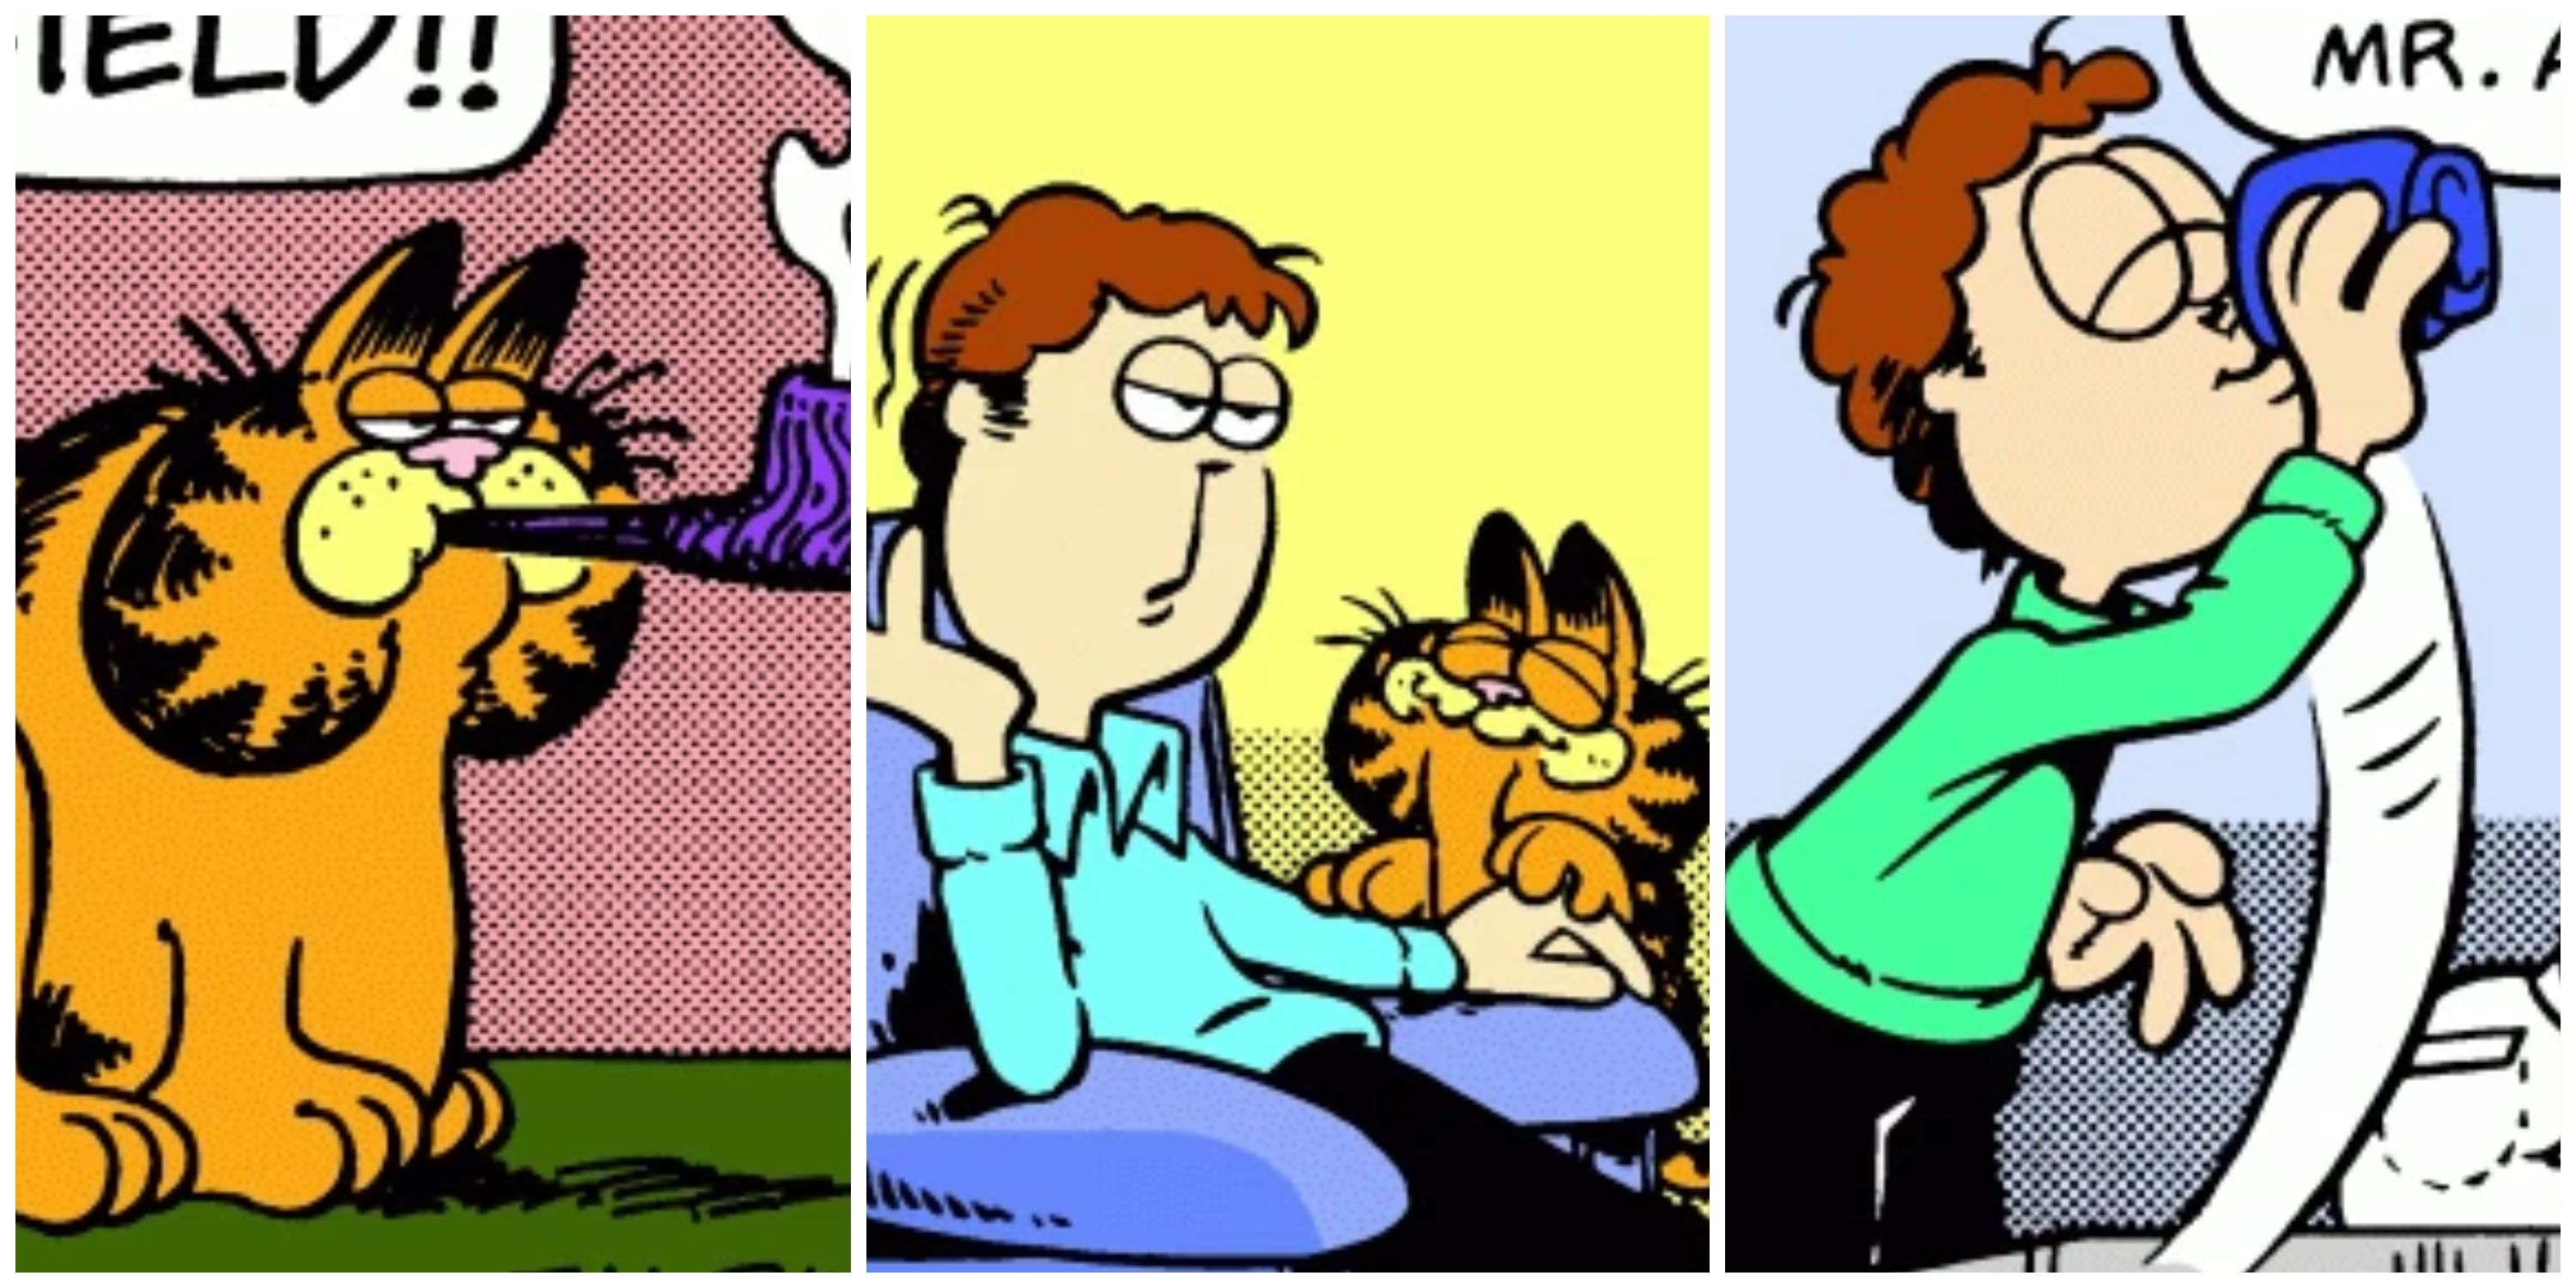 A split image of early Garfield, Jon and Garfield, and Jon Arbuckle drinking coffee